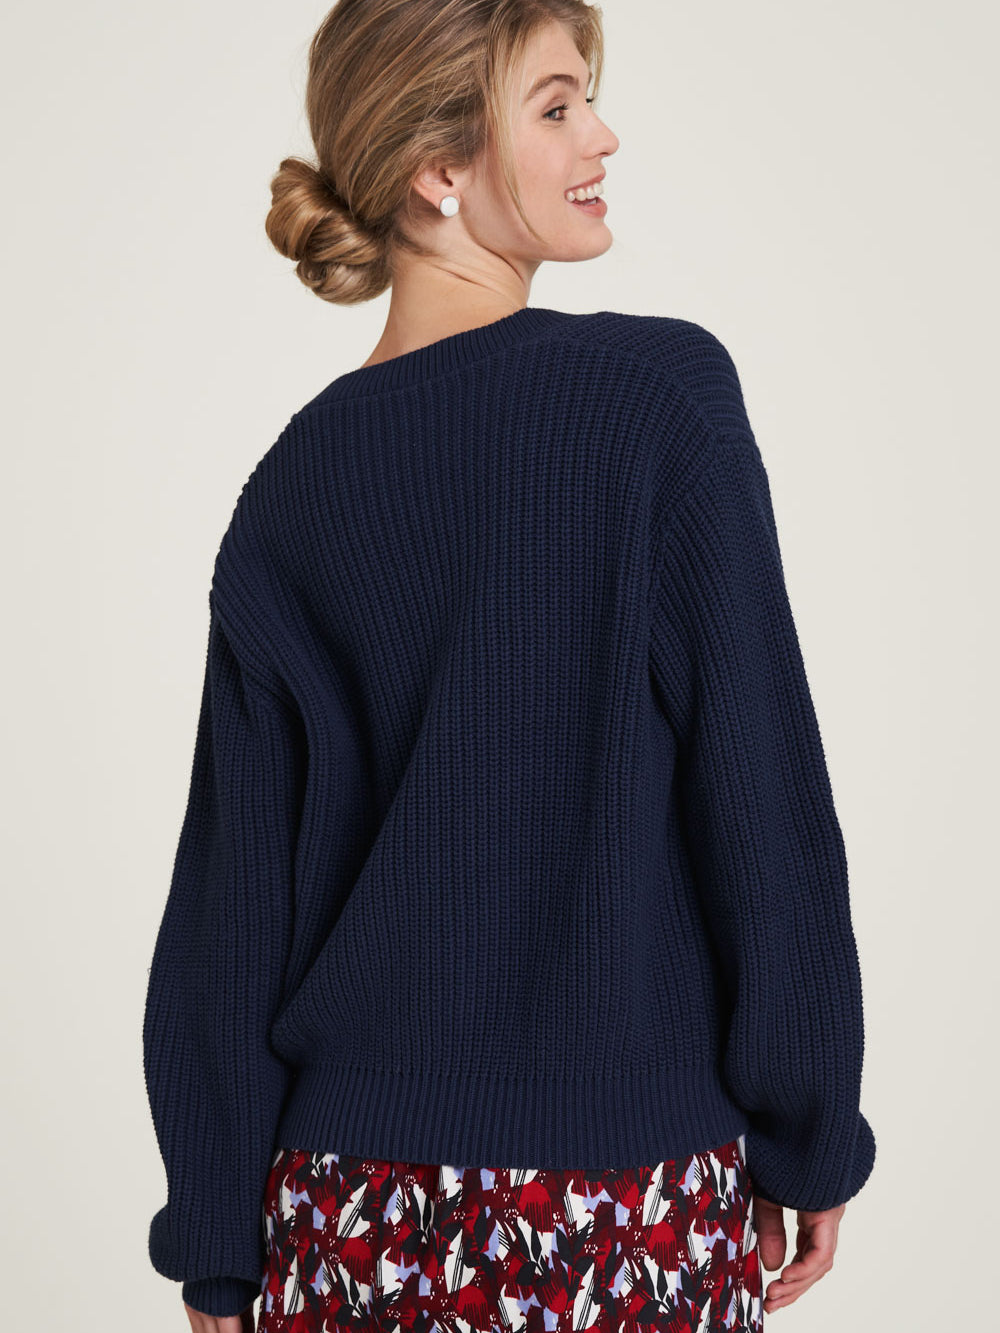 Knitted sweater dark navy